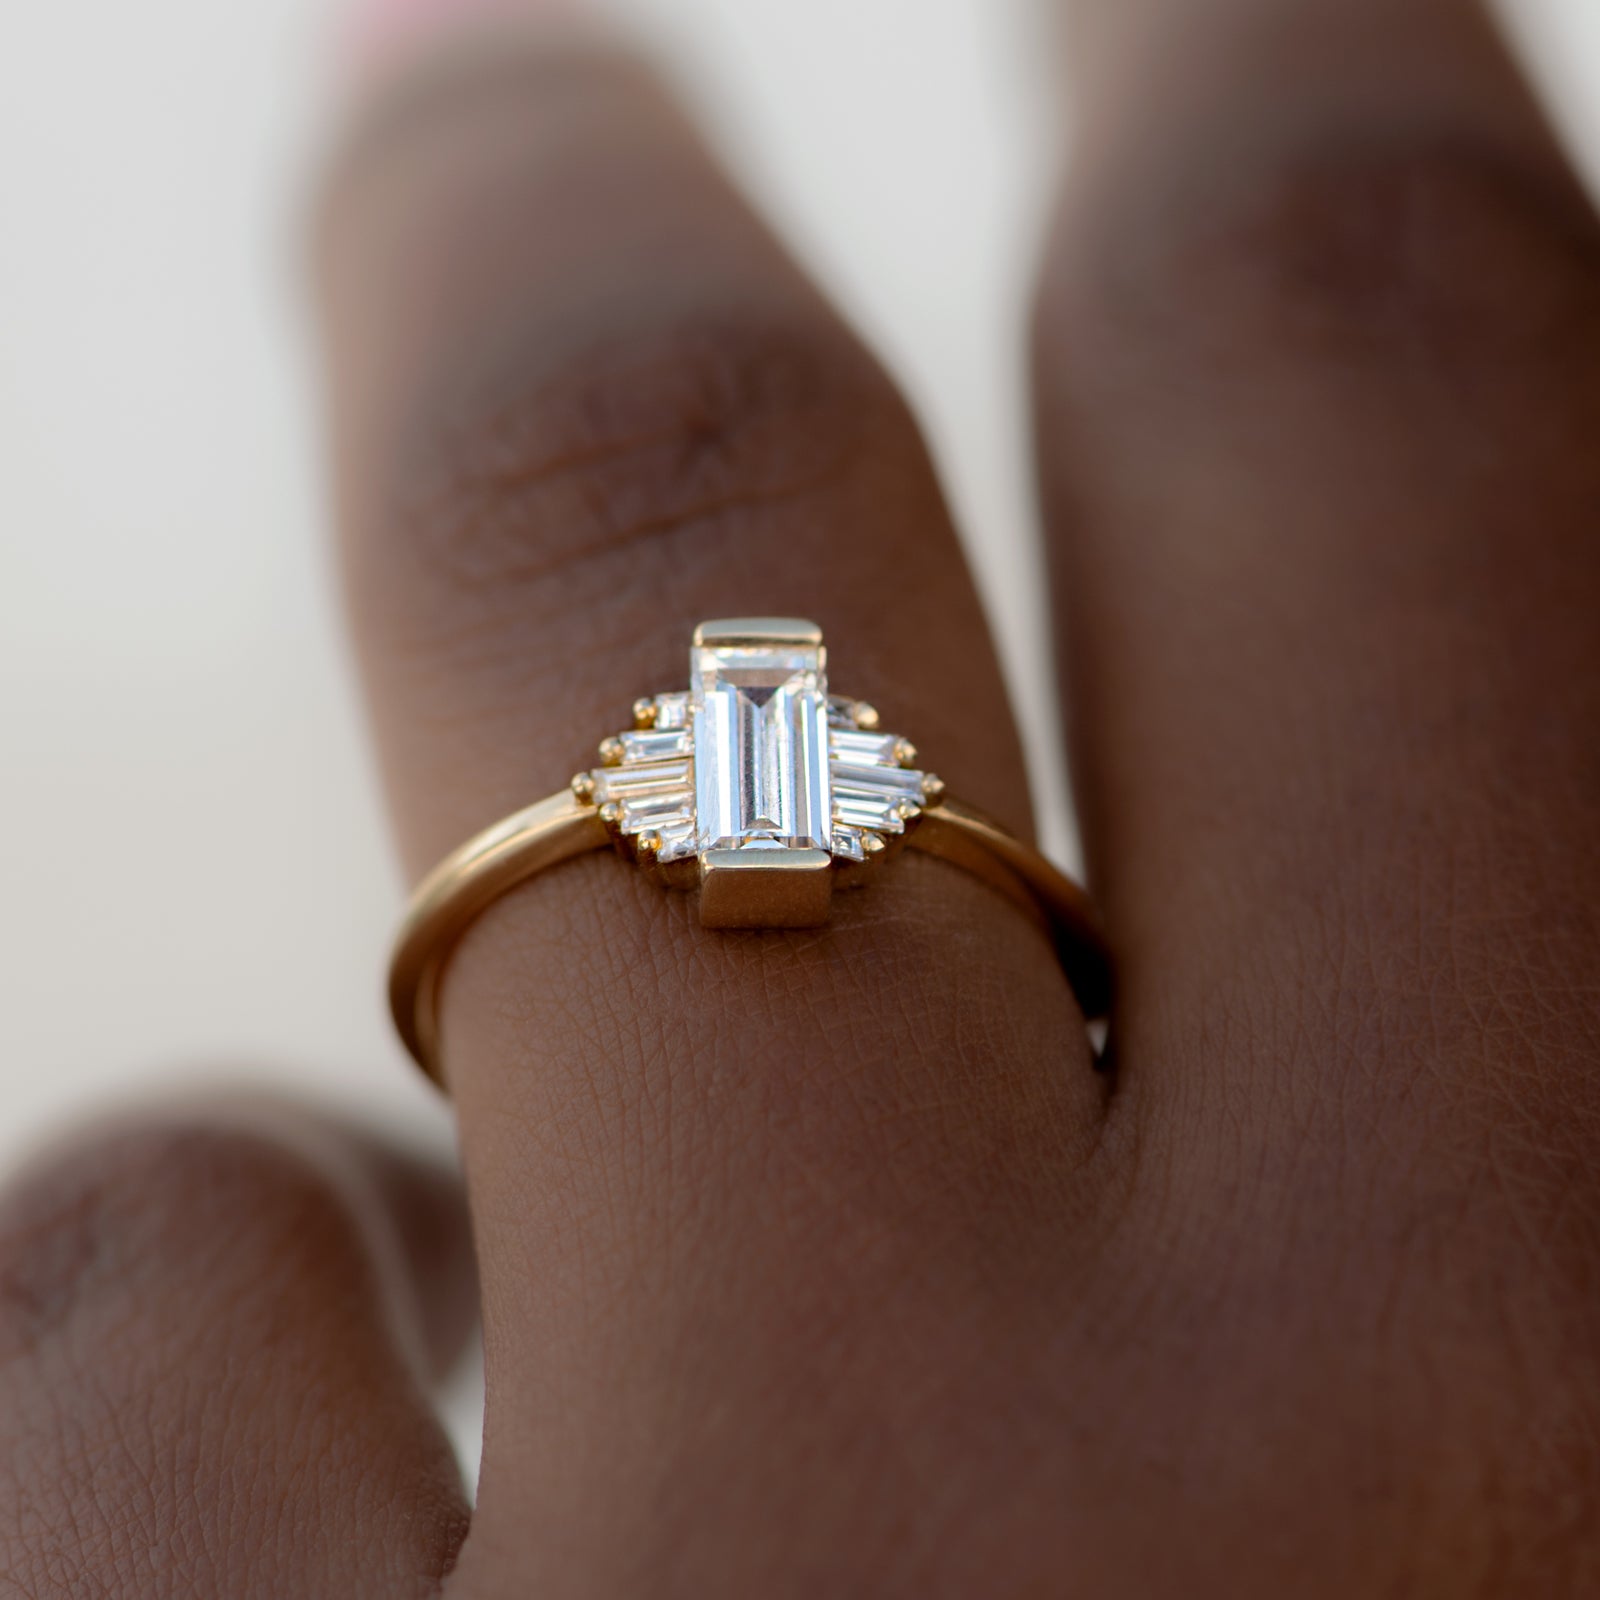 Classic Art Deco Engagement Ring With Baguette Cut Diamonds – Artemer